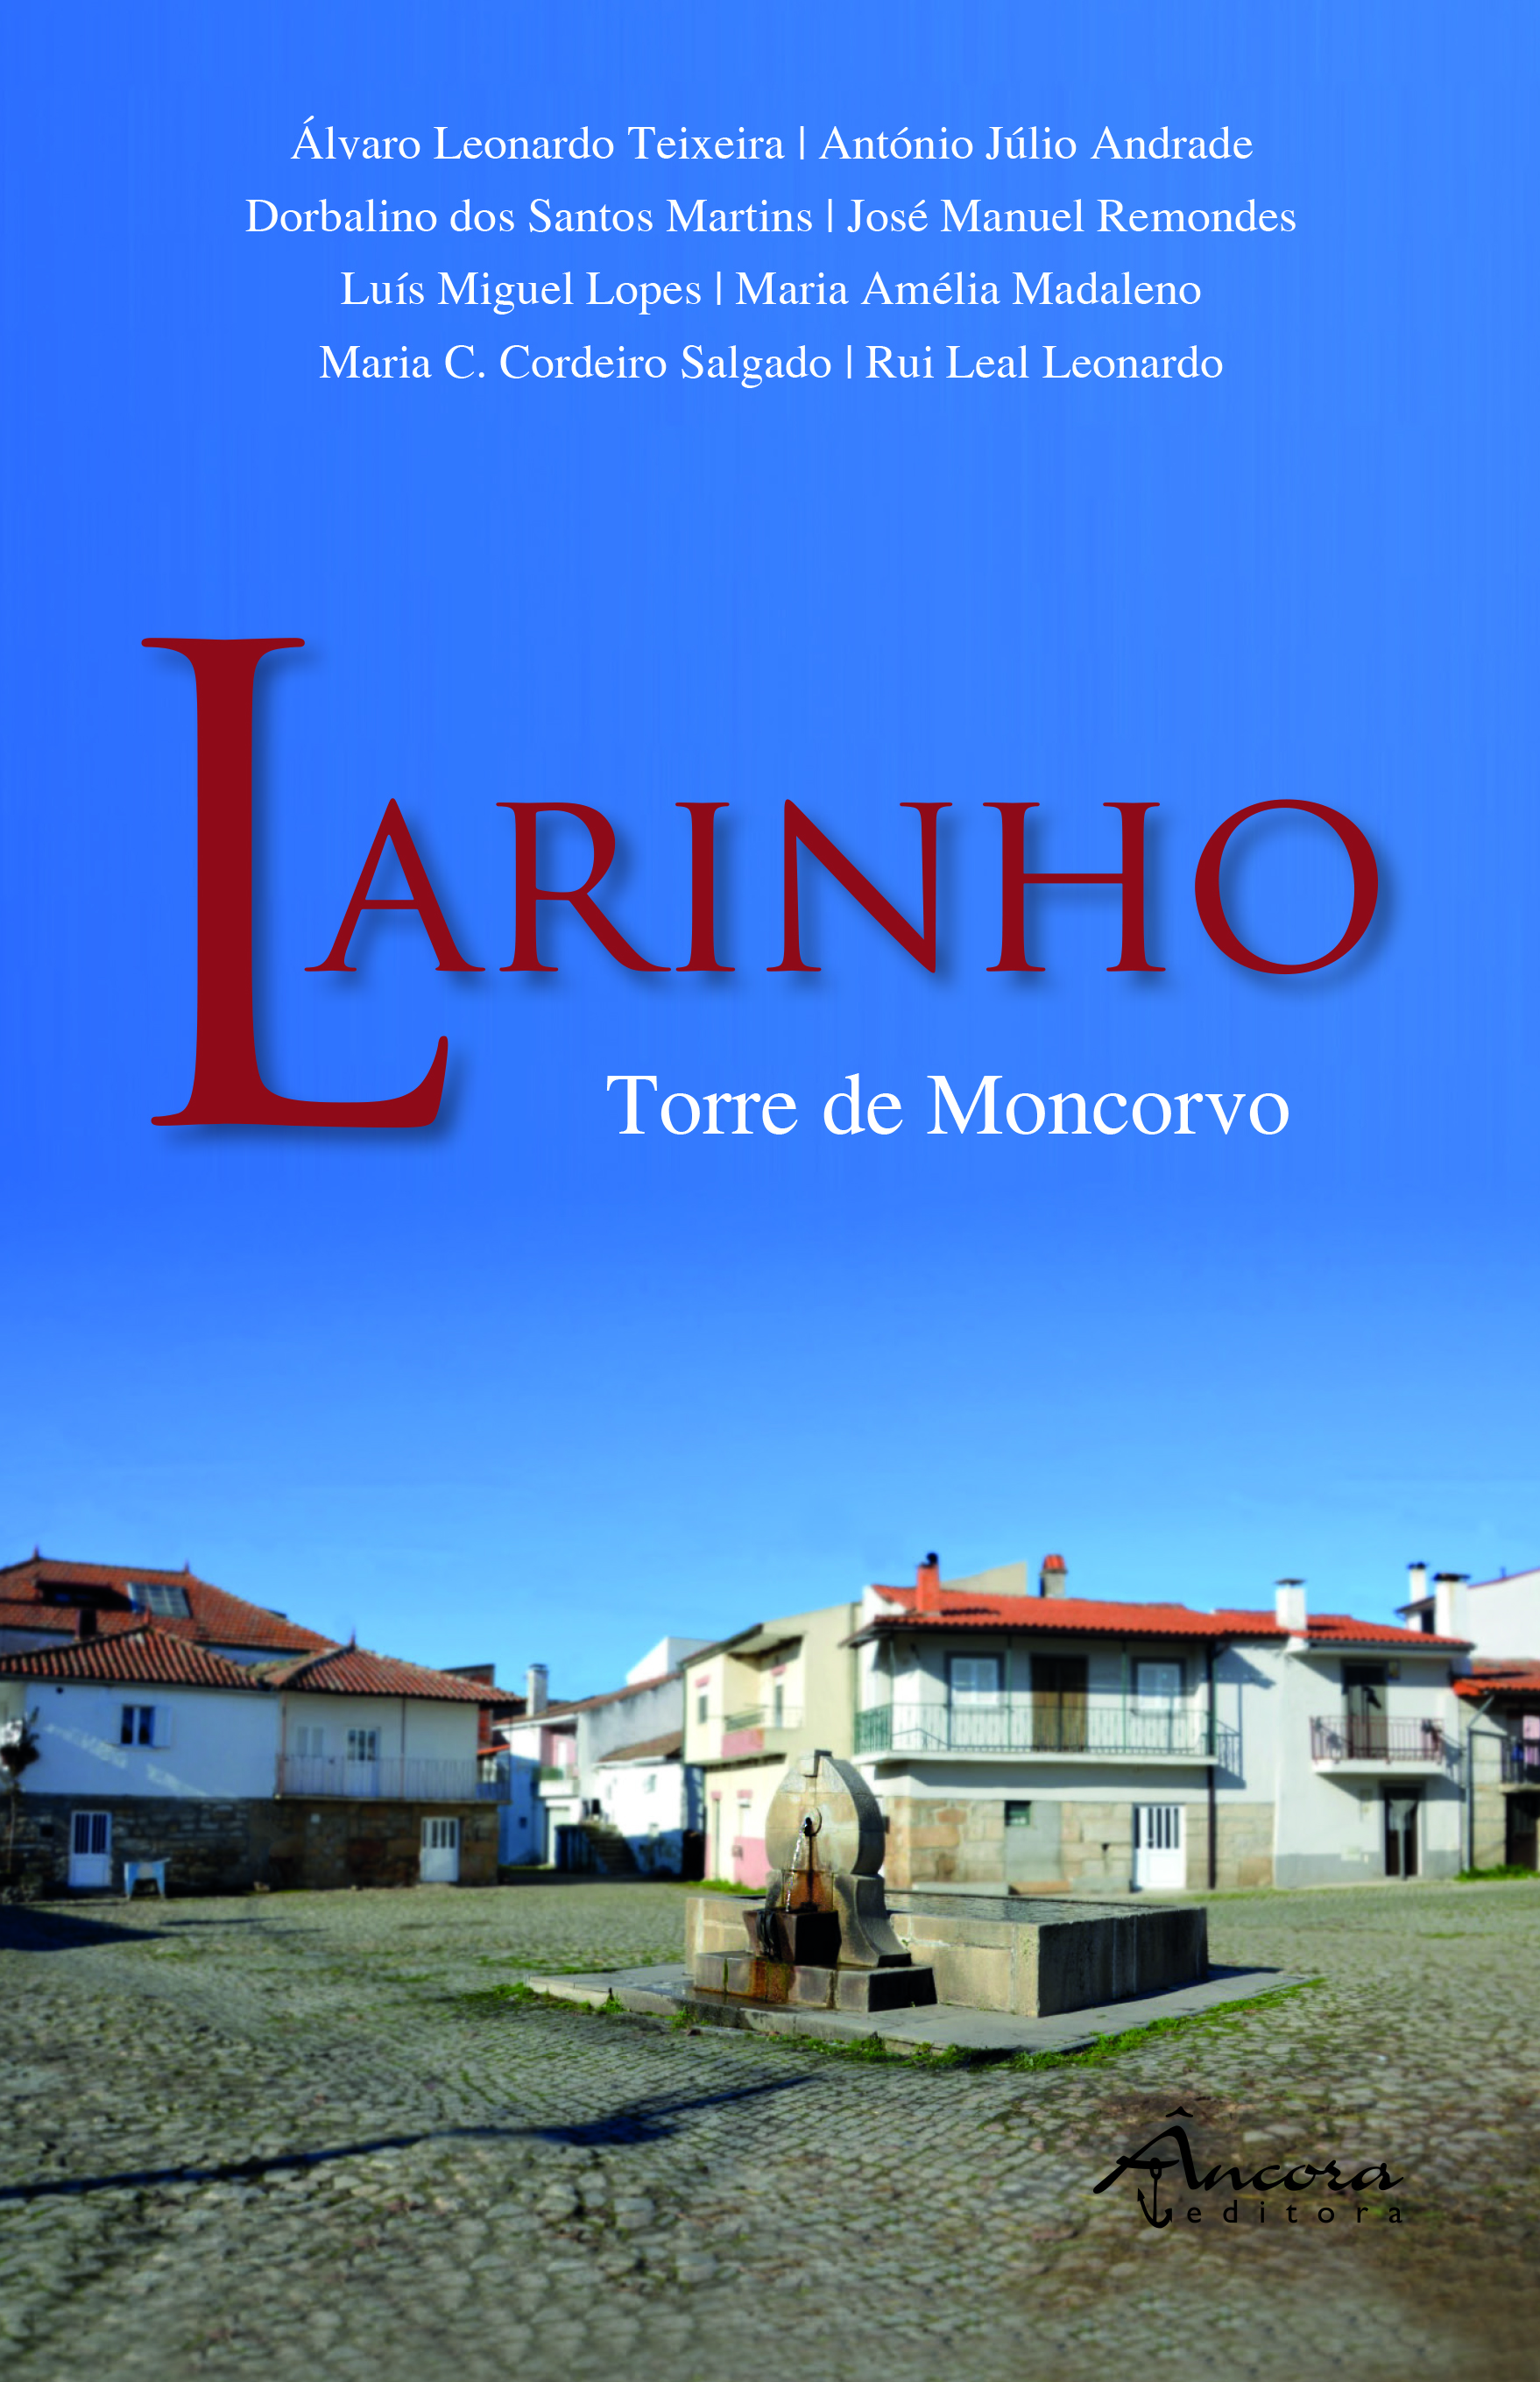 Larinho - Torre de Moncorvo